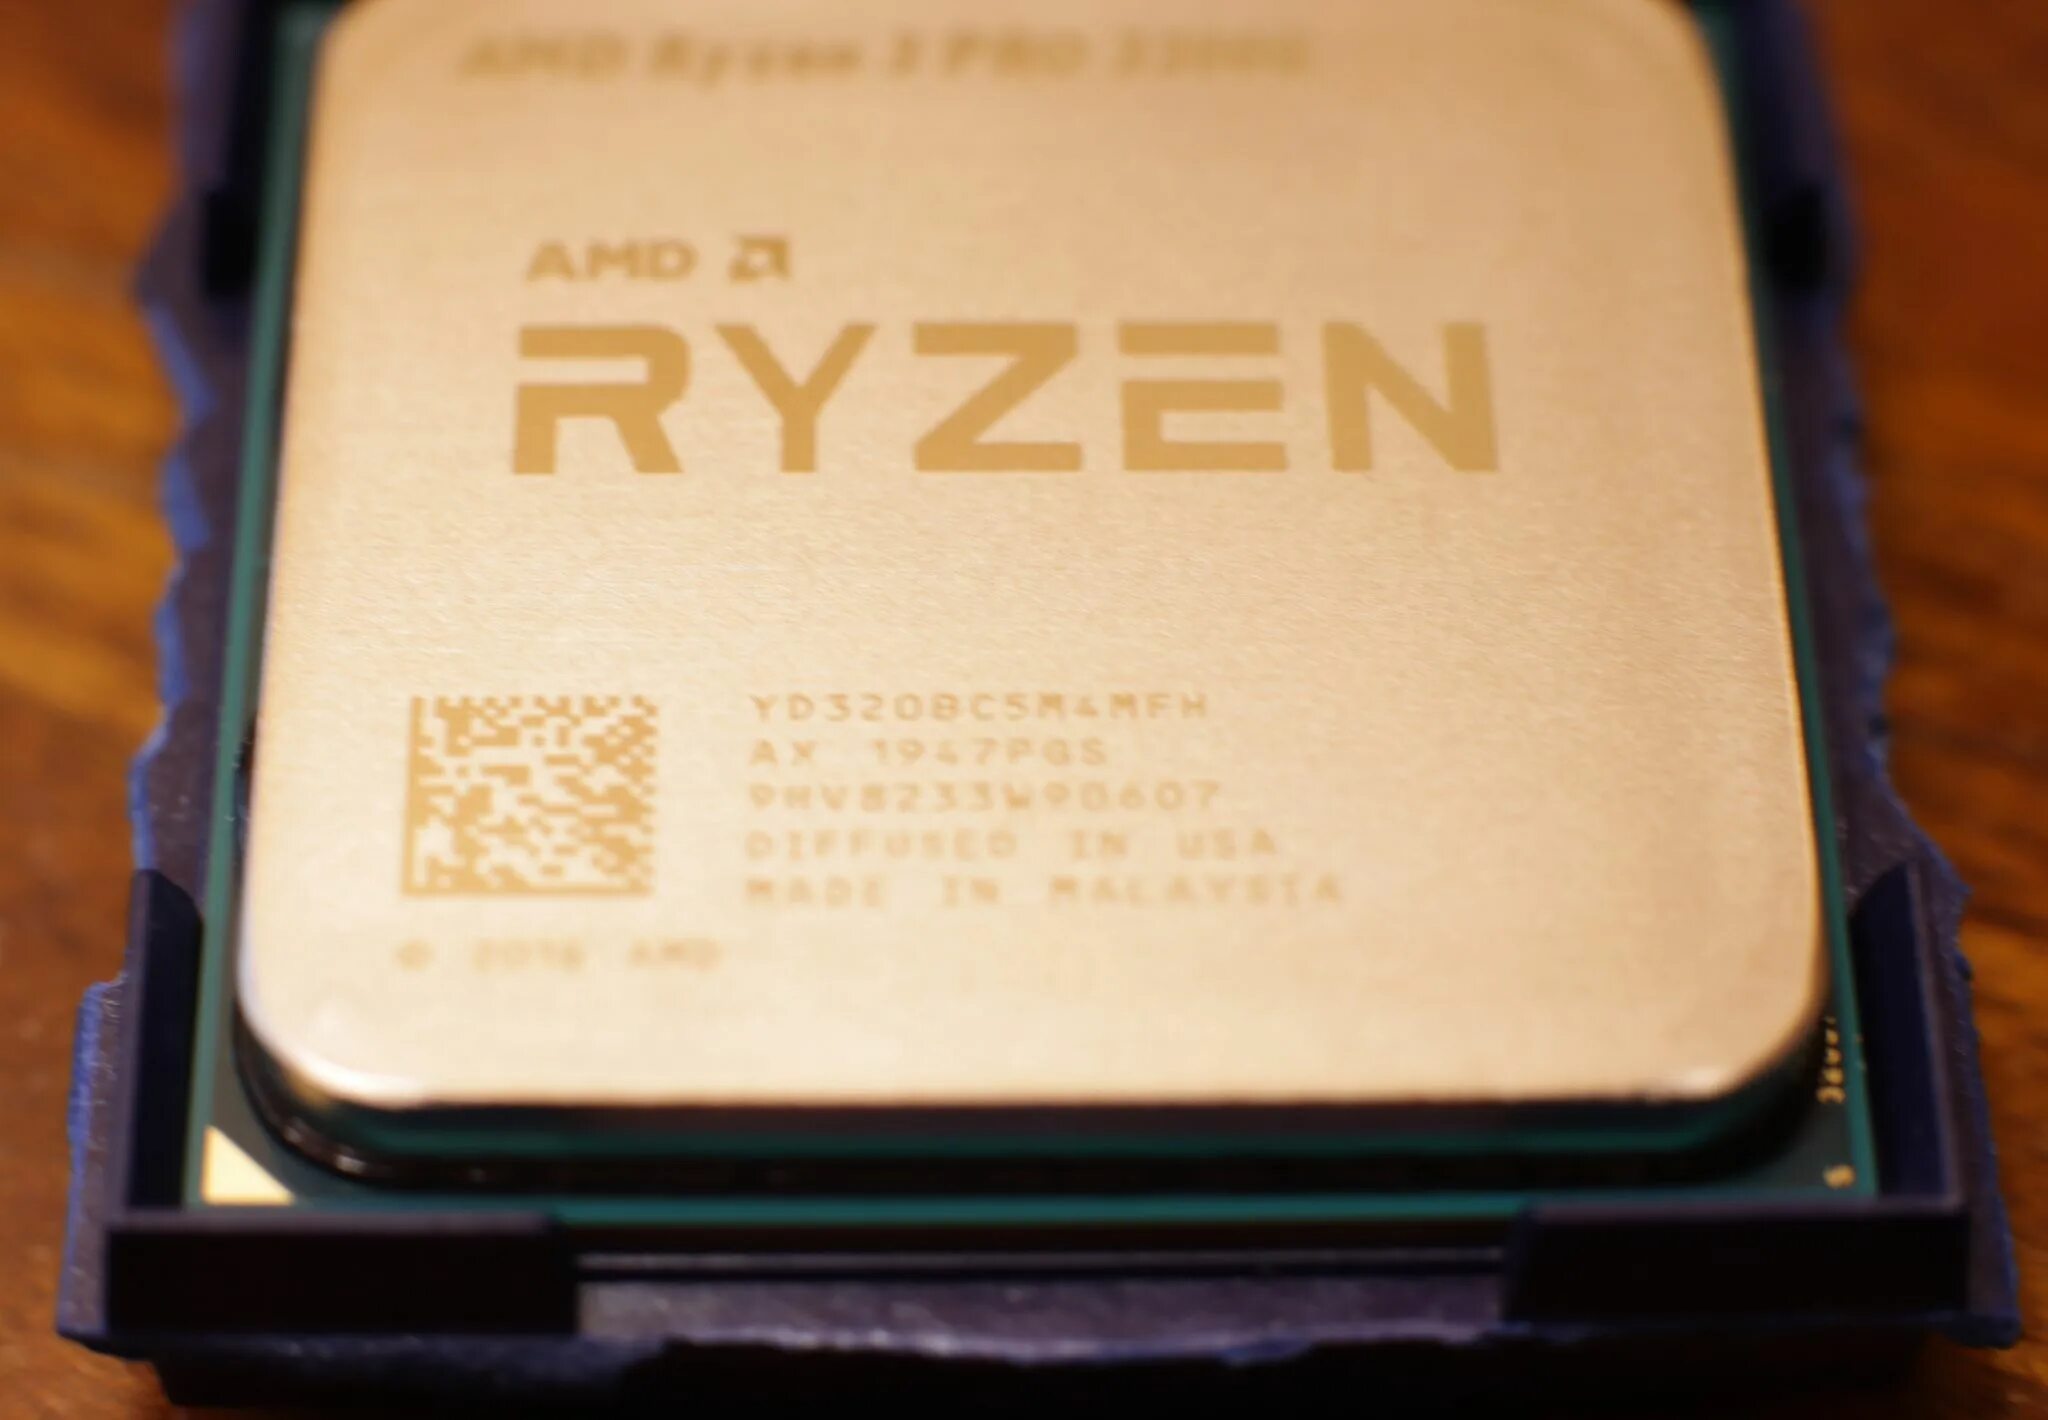 AMD Ryzen 3 Pro 3200g. Процессор AMD Ryzen 3 3200g am4. Ryzen 3 Pro 3200g процессор. Процессор AMD yd320bc5m4mfh. Ryzen 3 pro 3200g